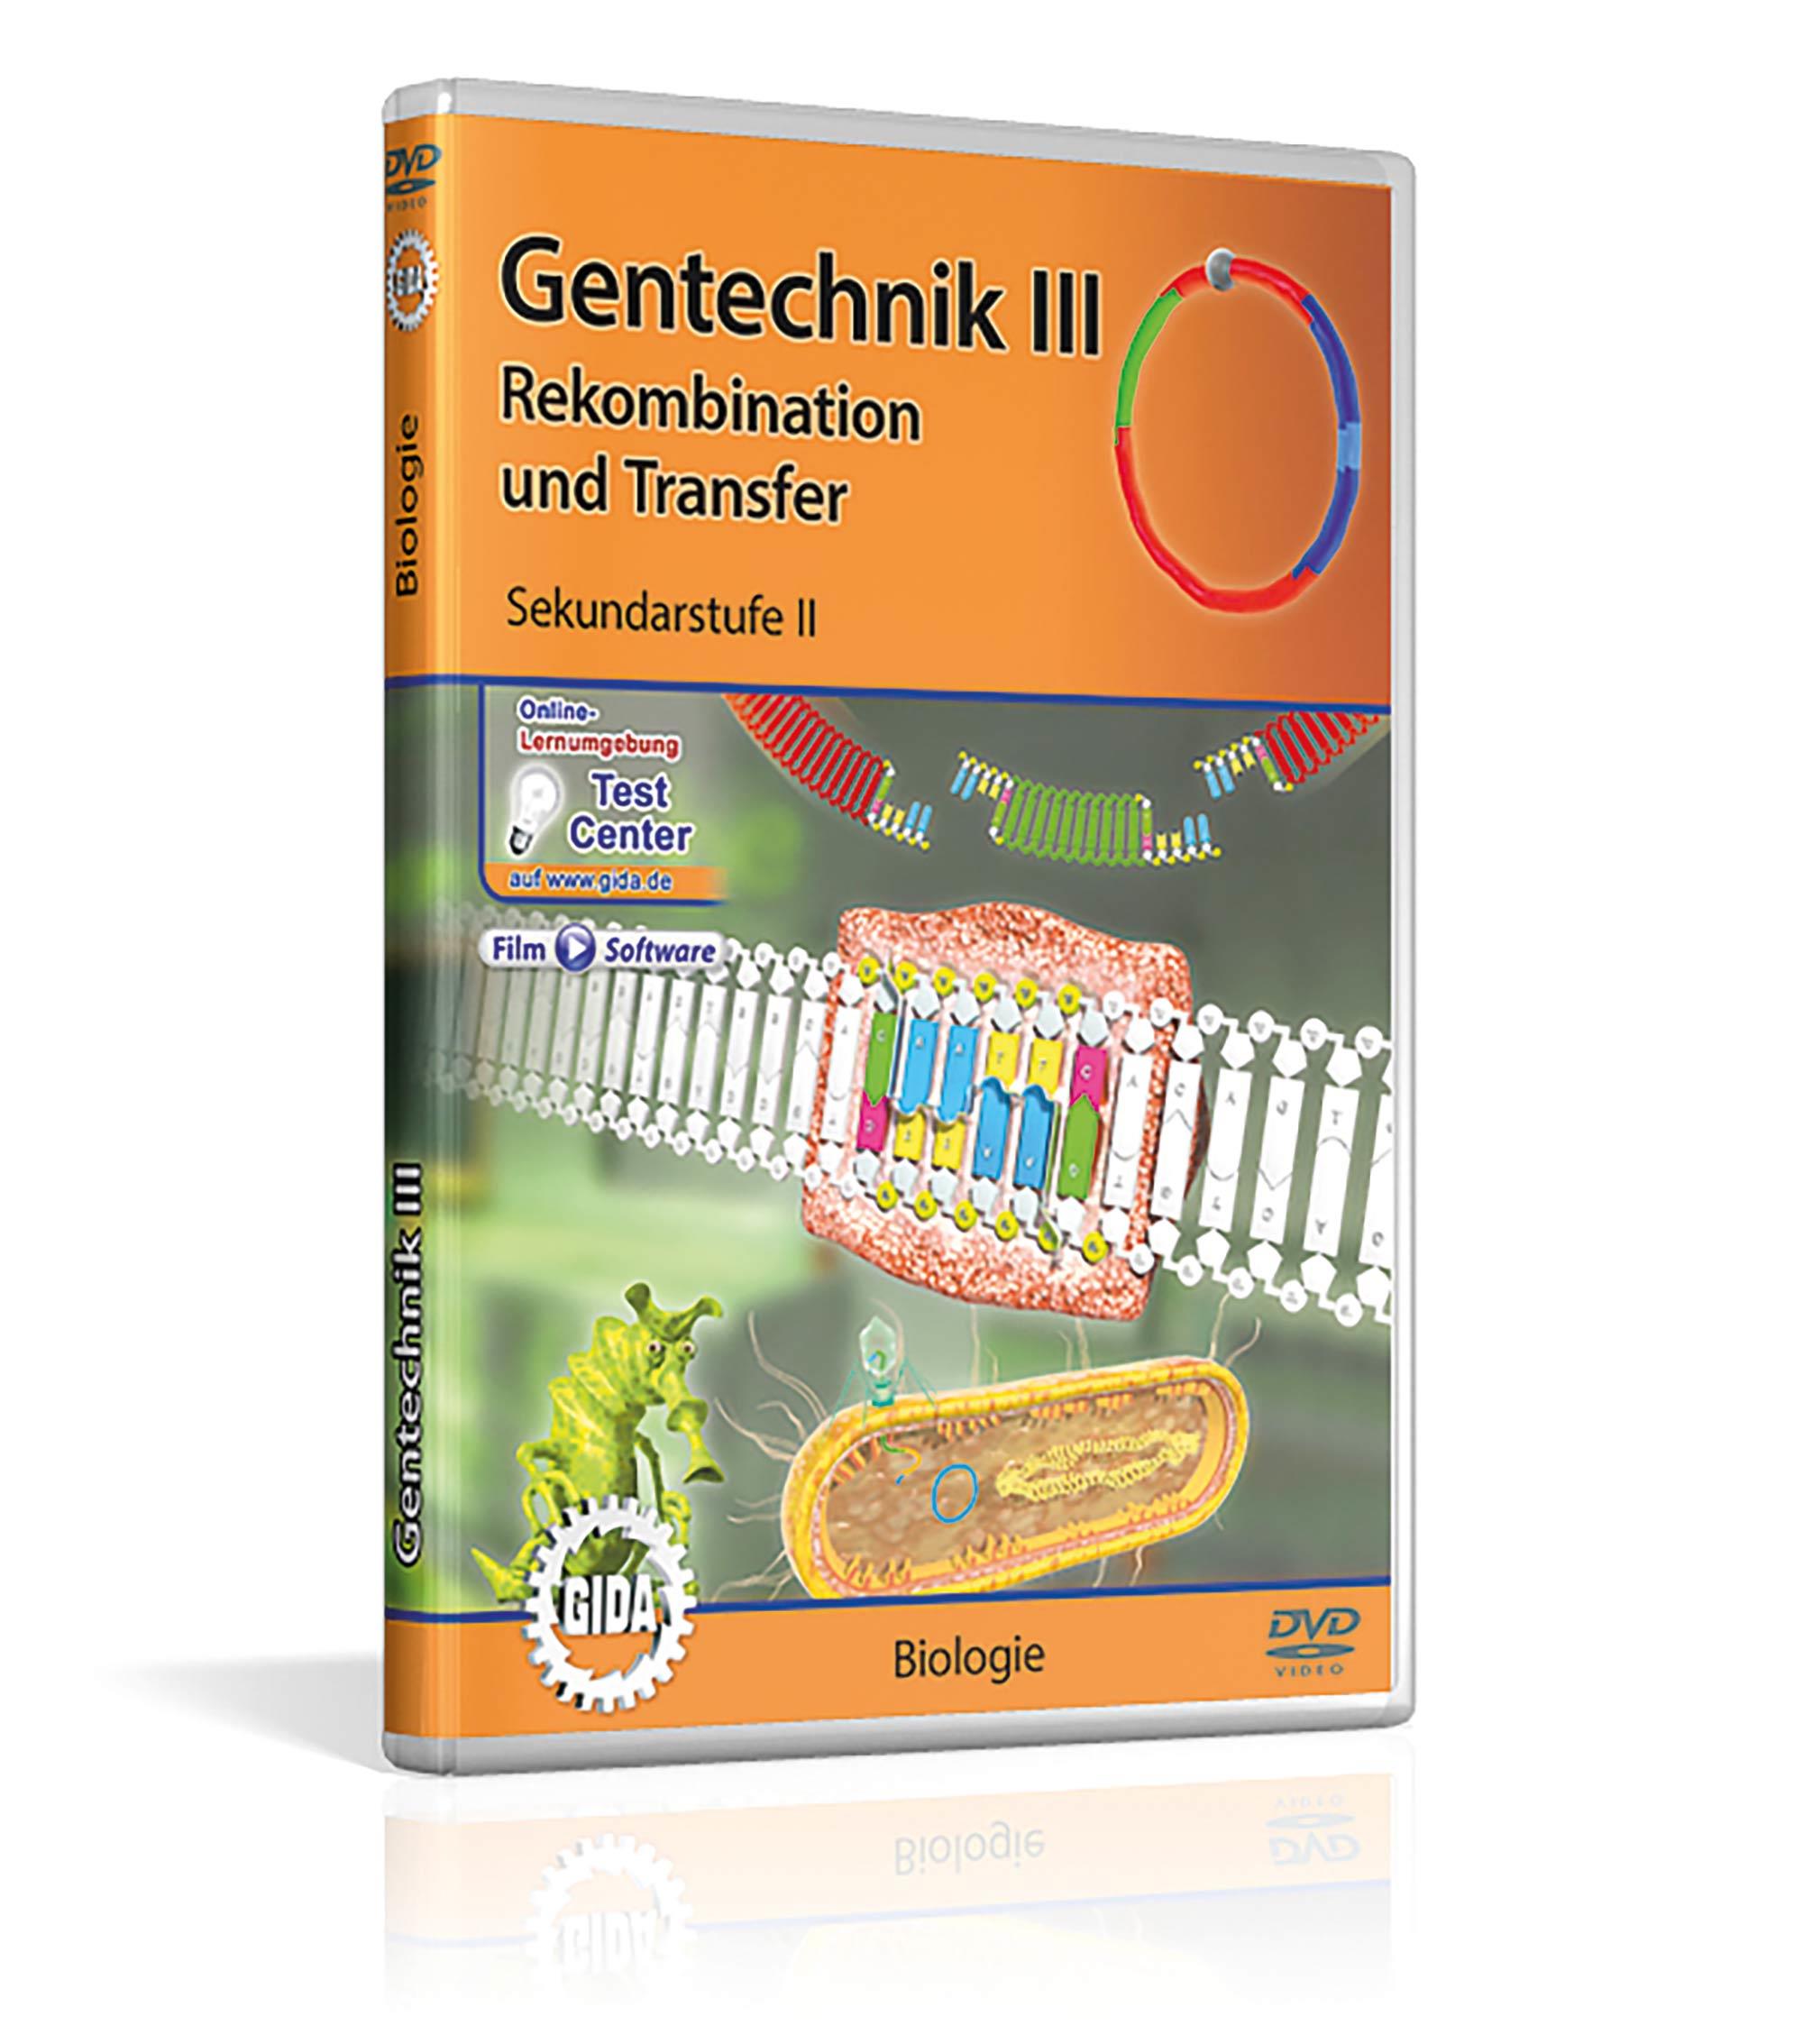 Gentechnik III: Rekombination und Transfer